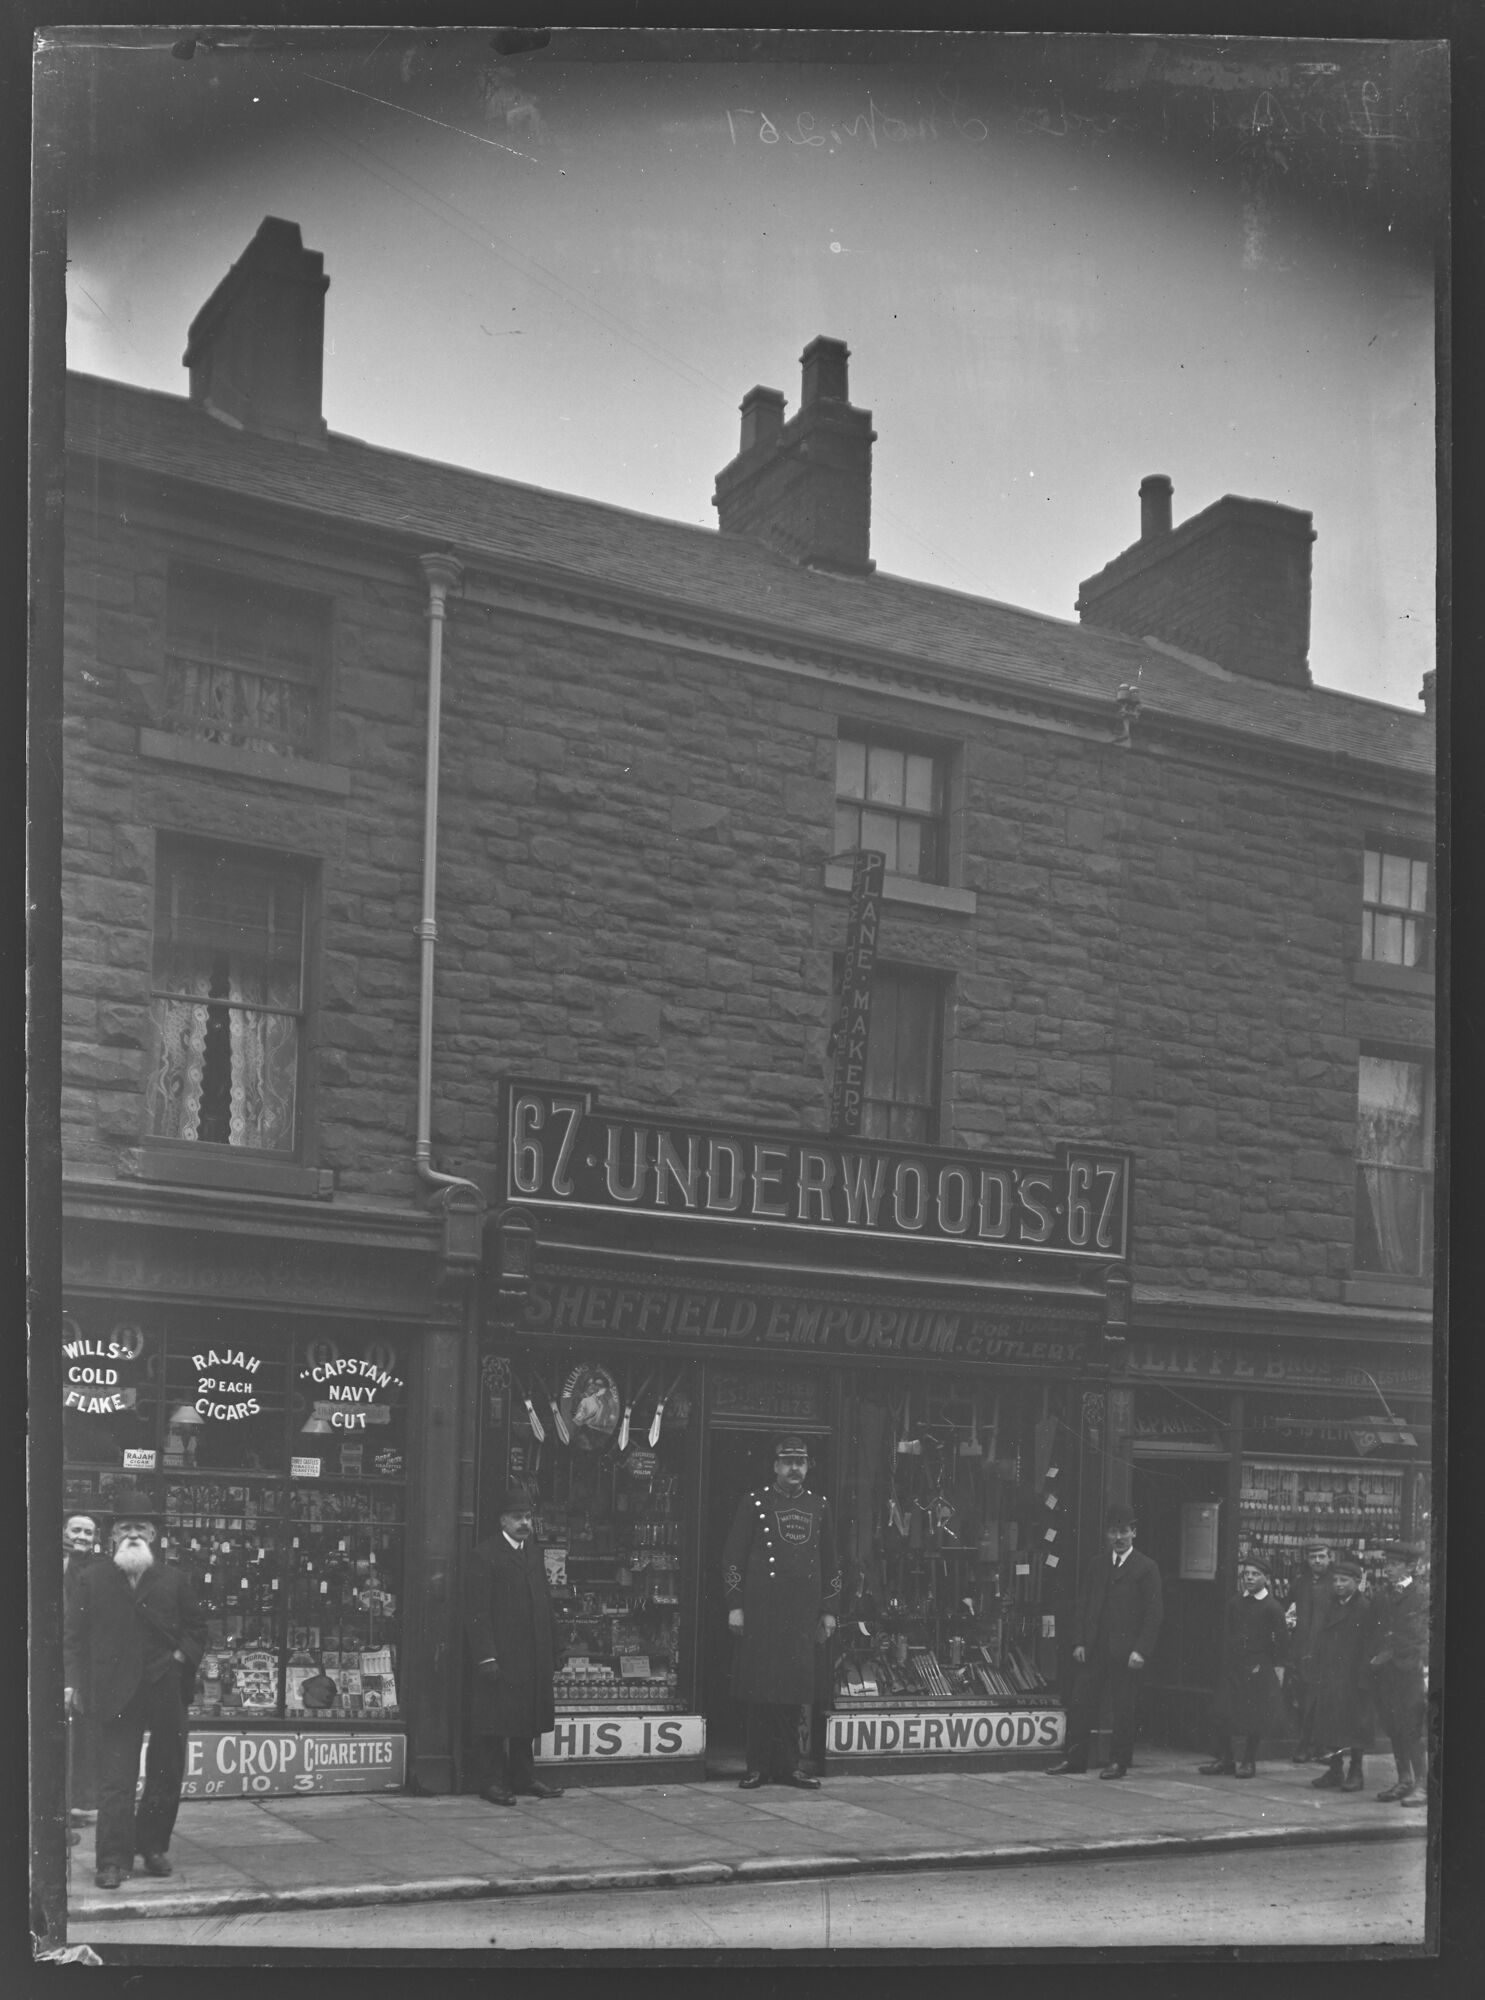 Underwood's Sheffield Emporium, Barrow-in-Furness